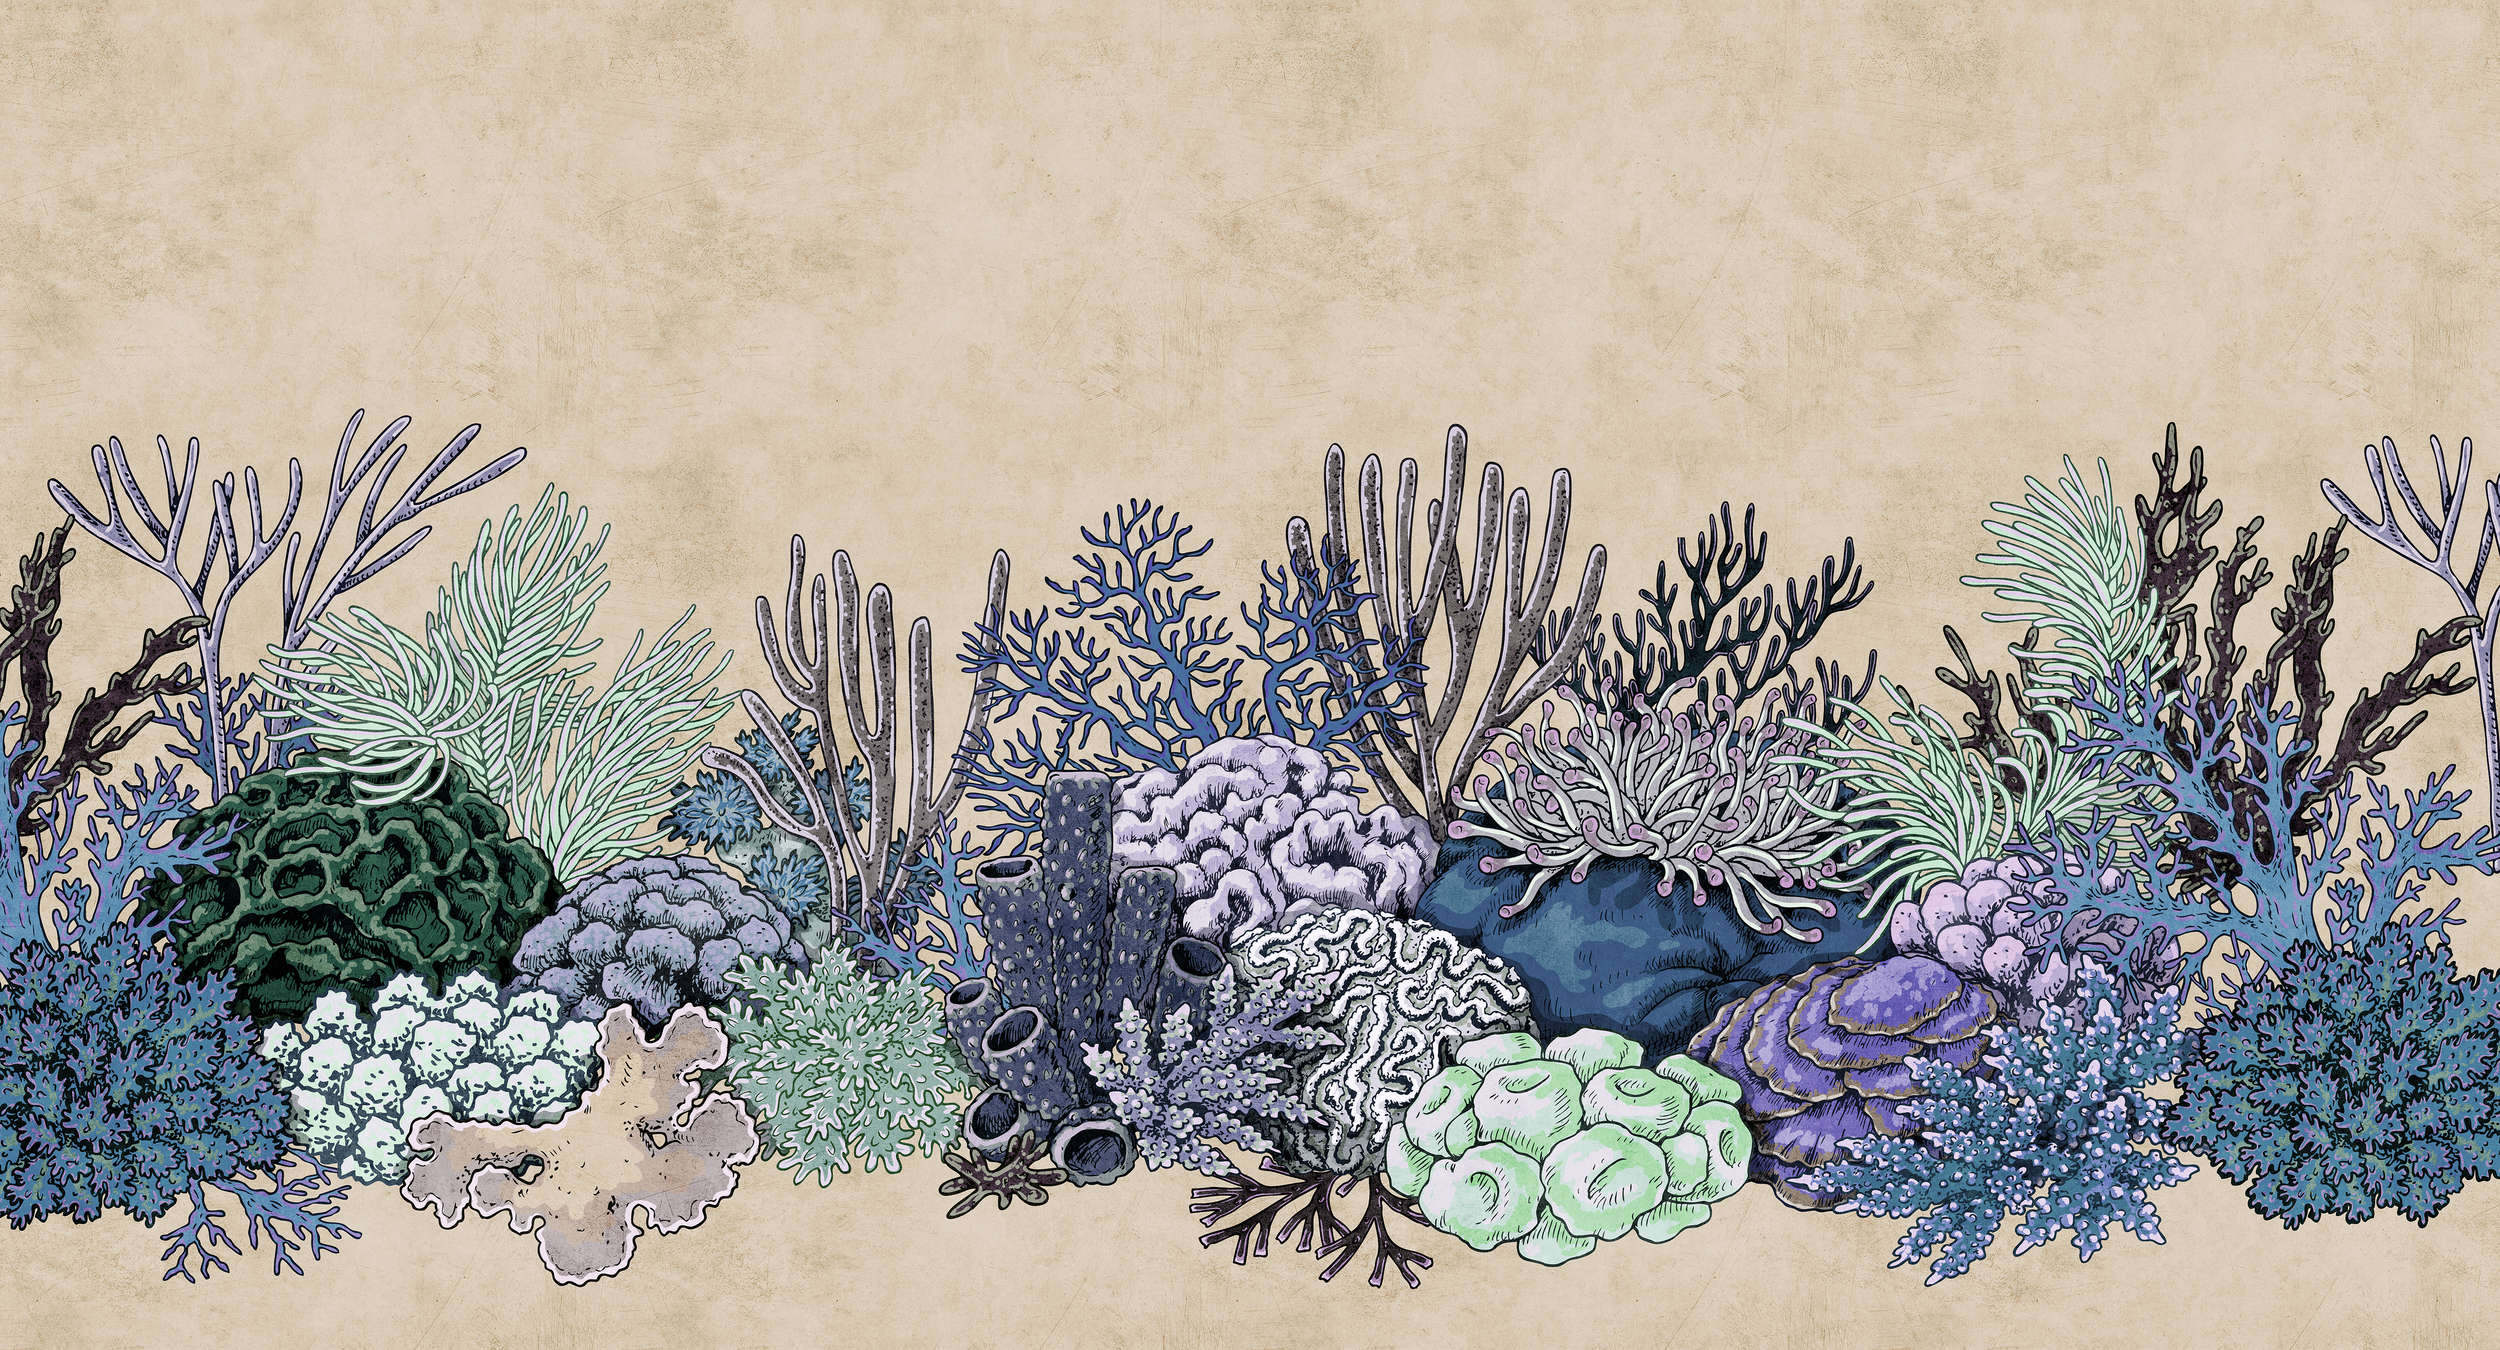             Octopus's Garden 3 - Photo wallpaper Coral & Reef Landscape- Blotting Paper Texture - Beige | Texture Non-woven
        